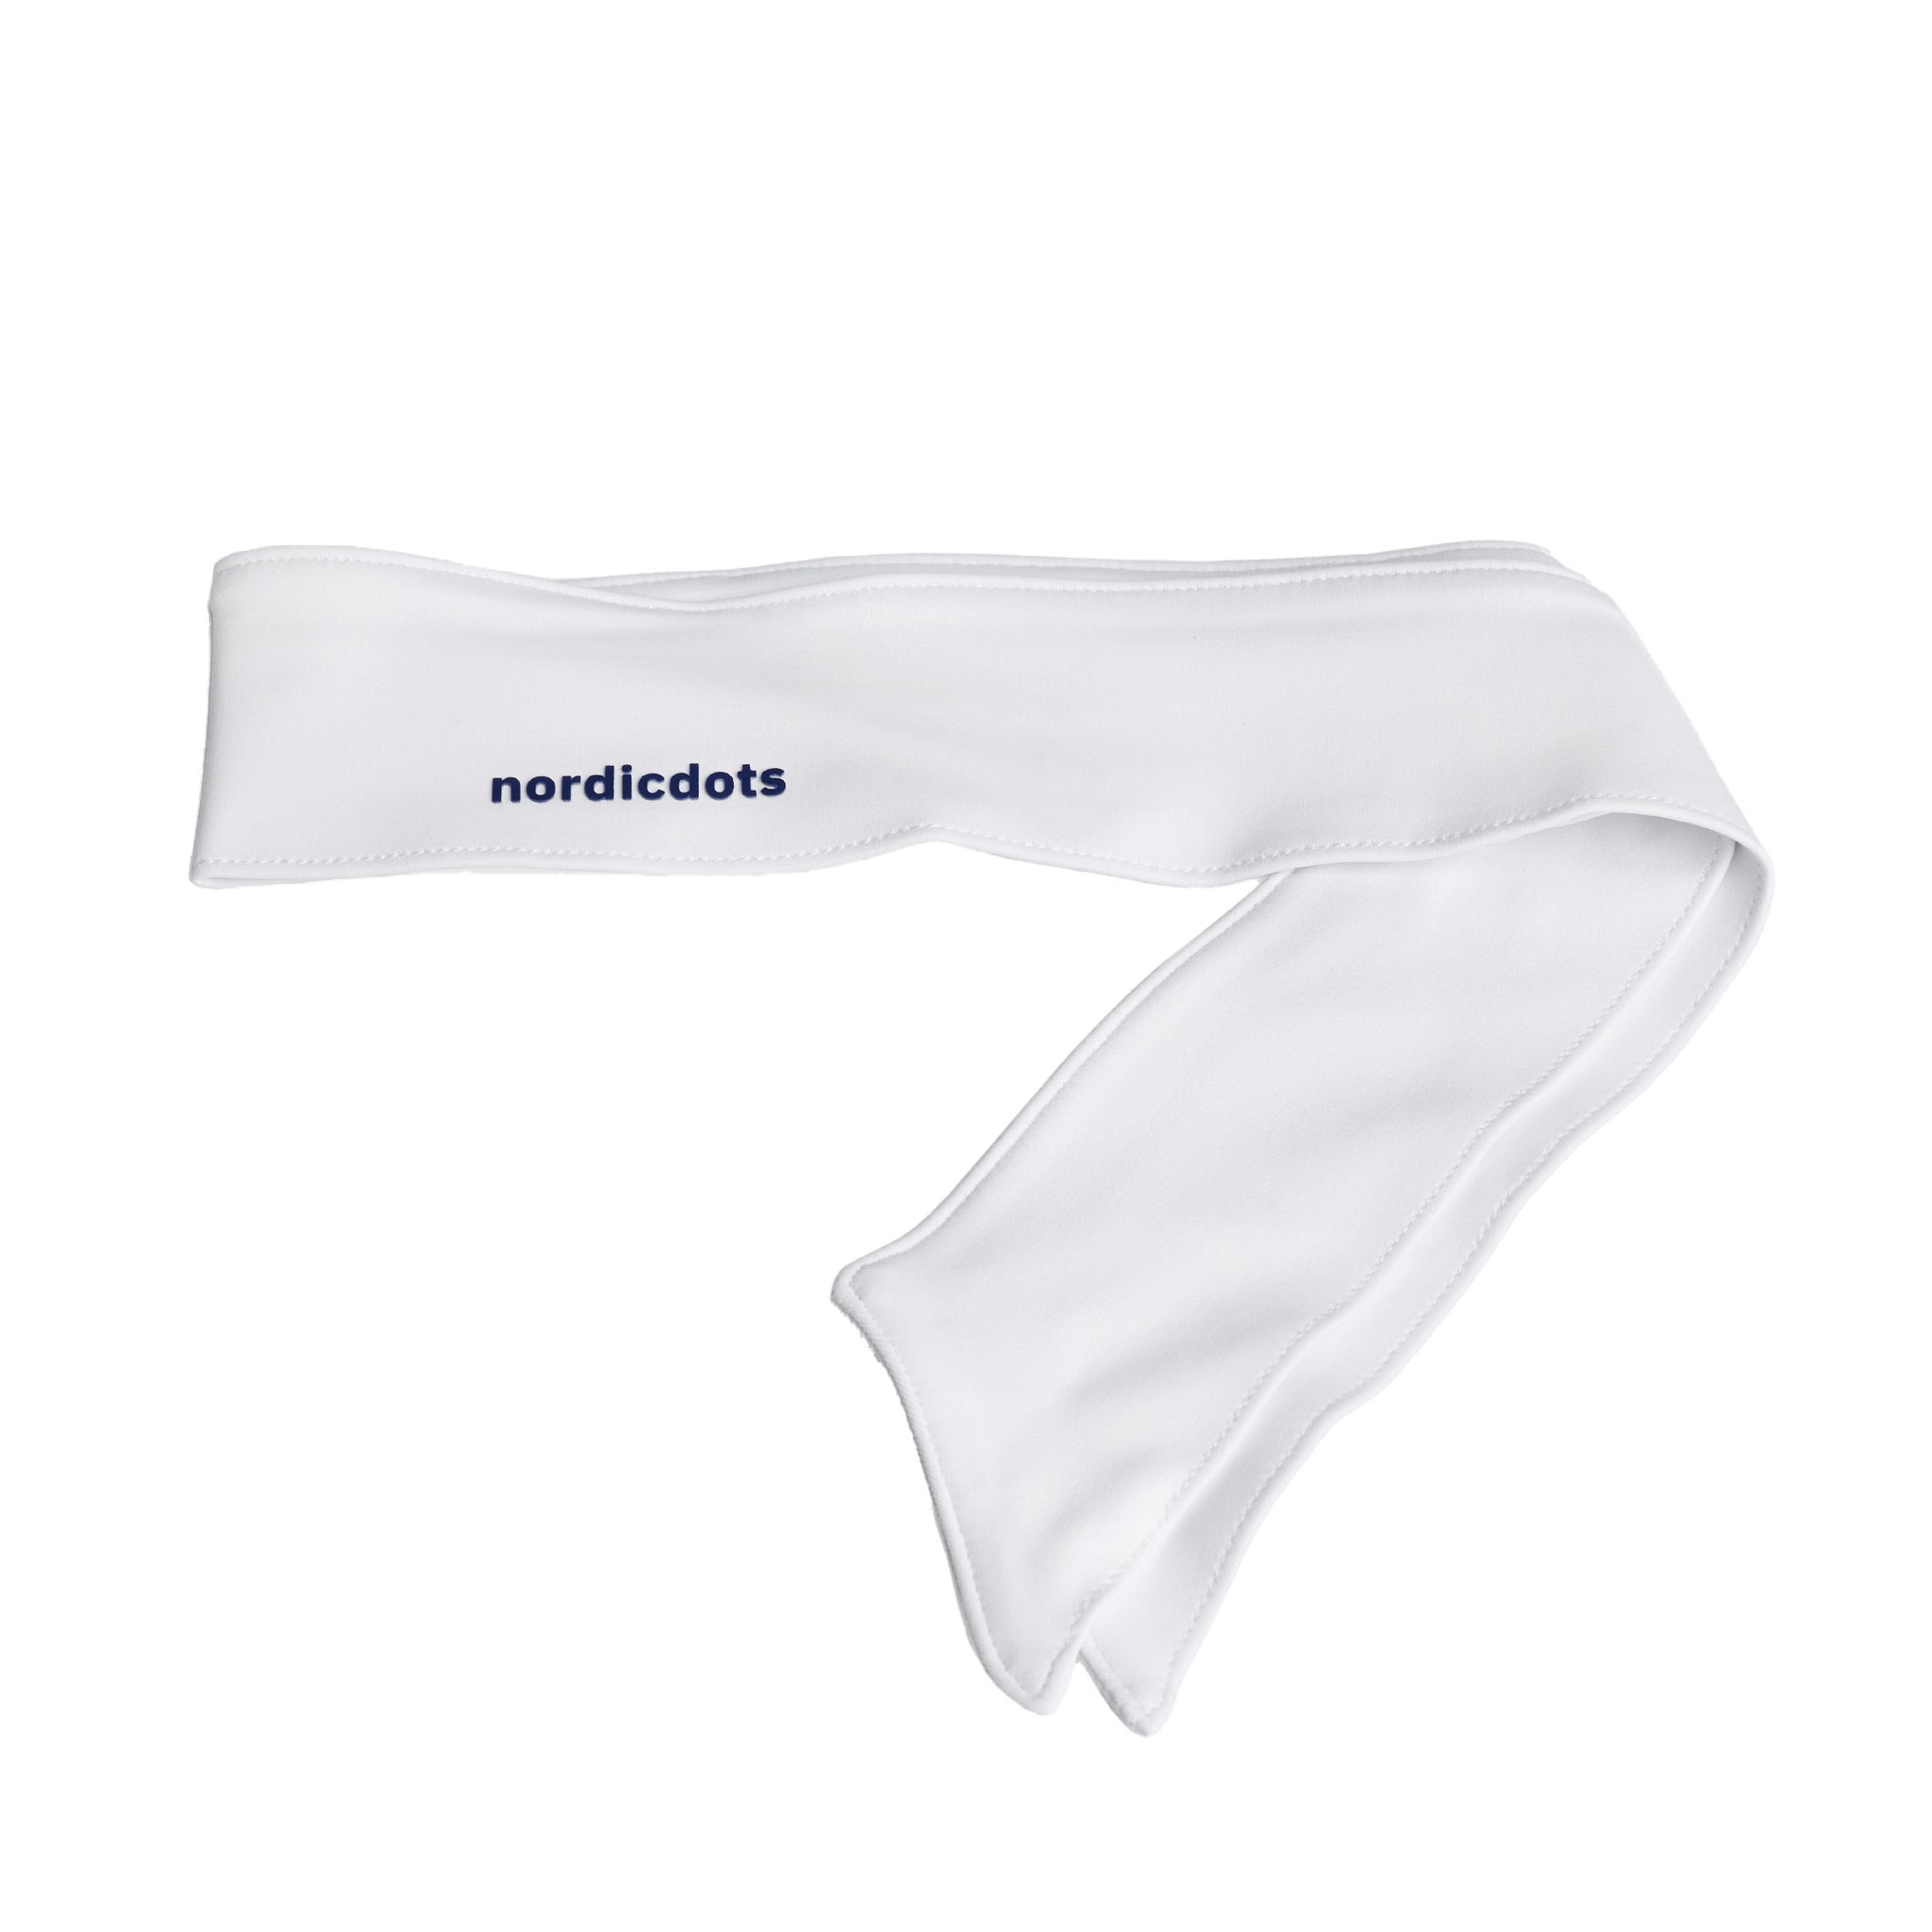 nordicdots Men's Match Headband White